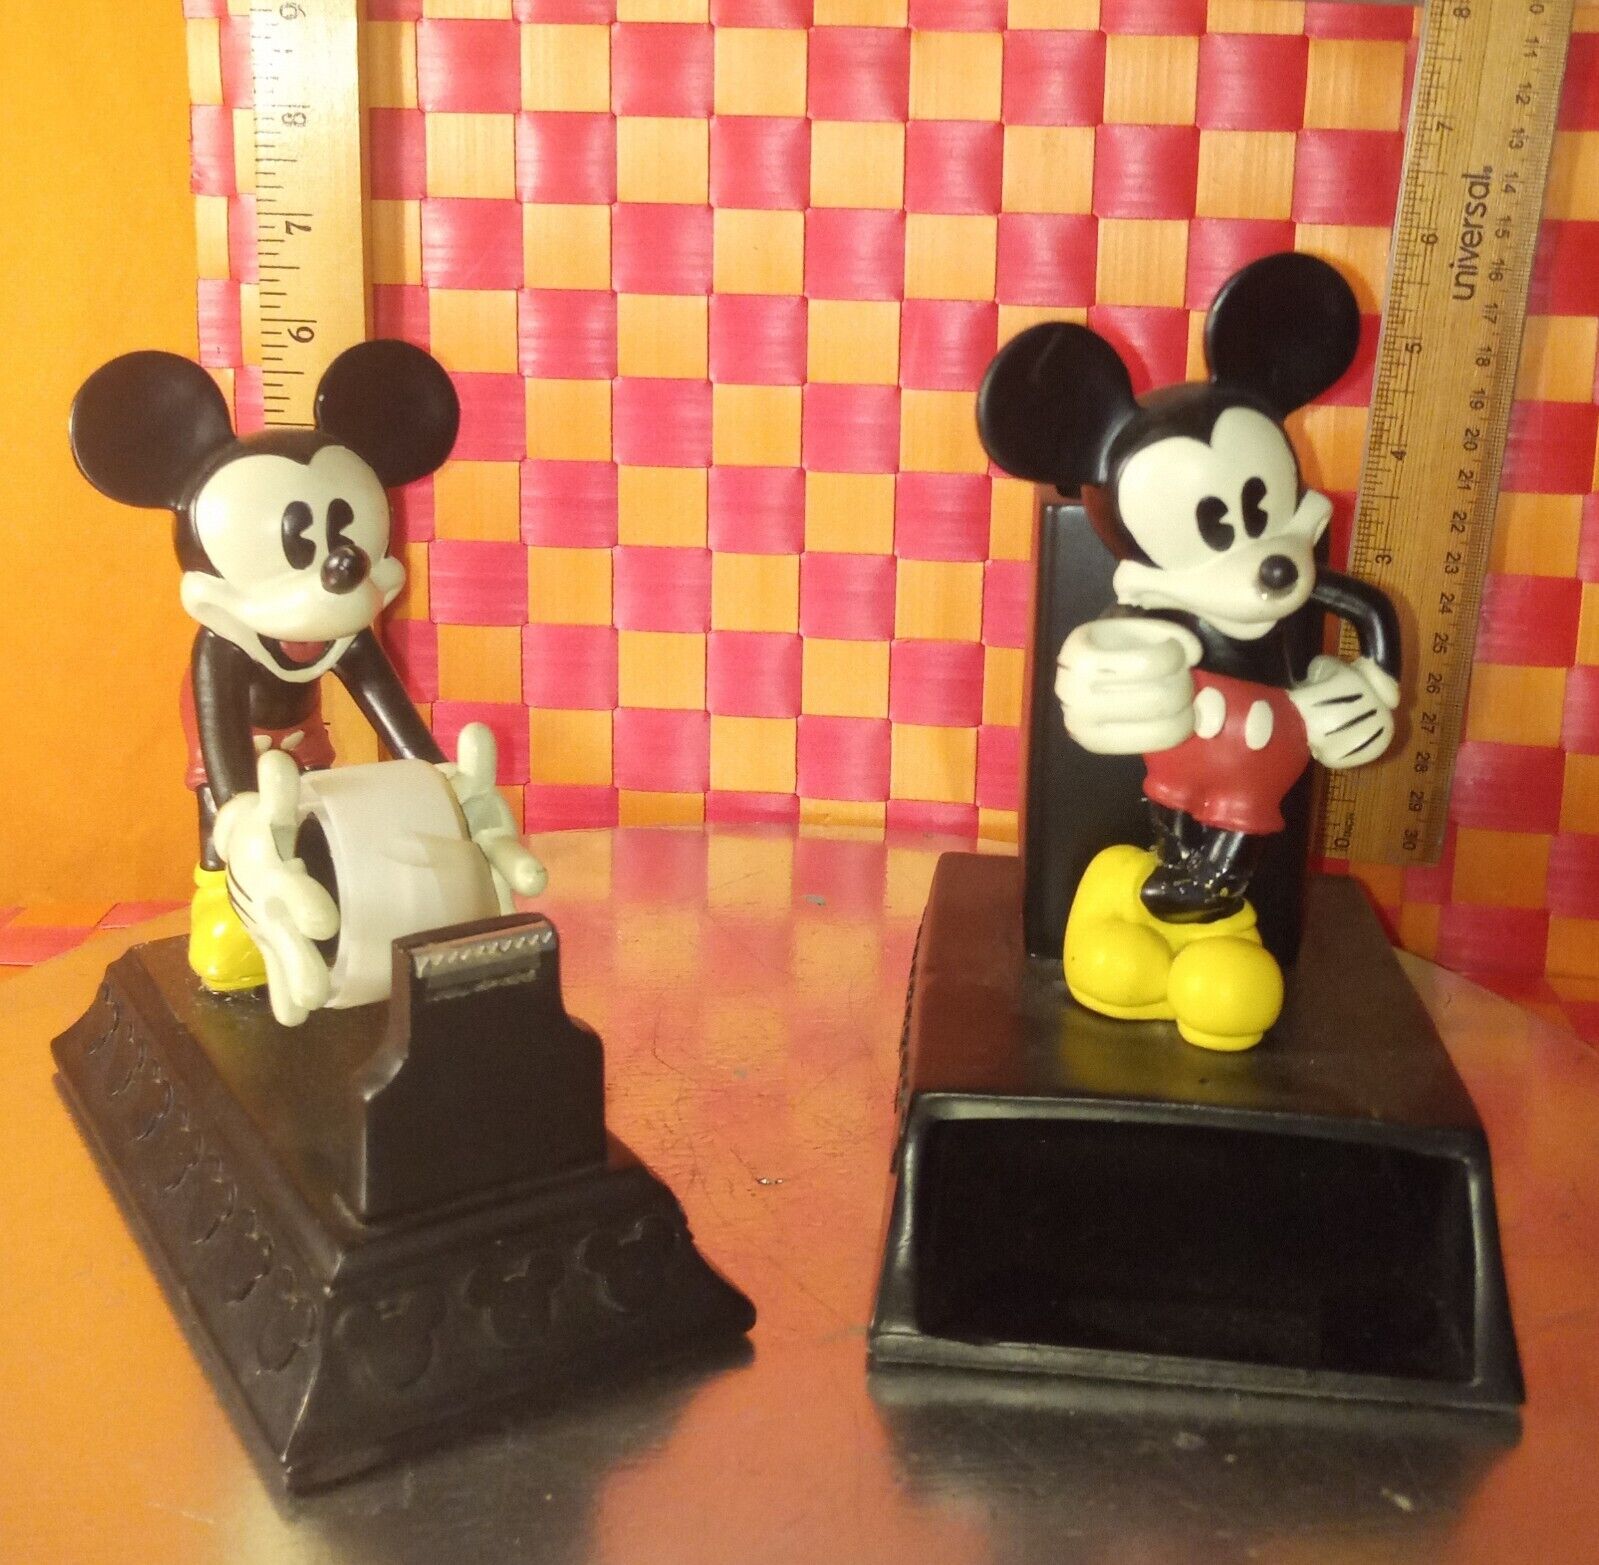 Vintage Disney Mickey Mouse Desk Set Pen, Stationary Holders and Tape Dispenser